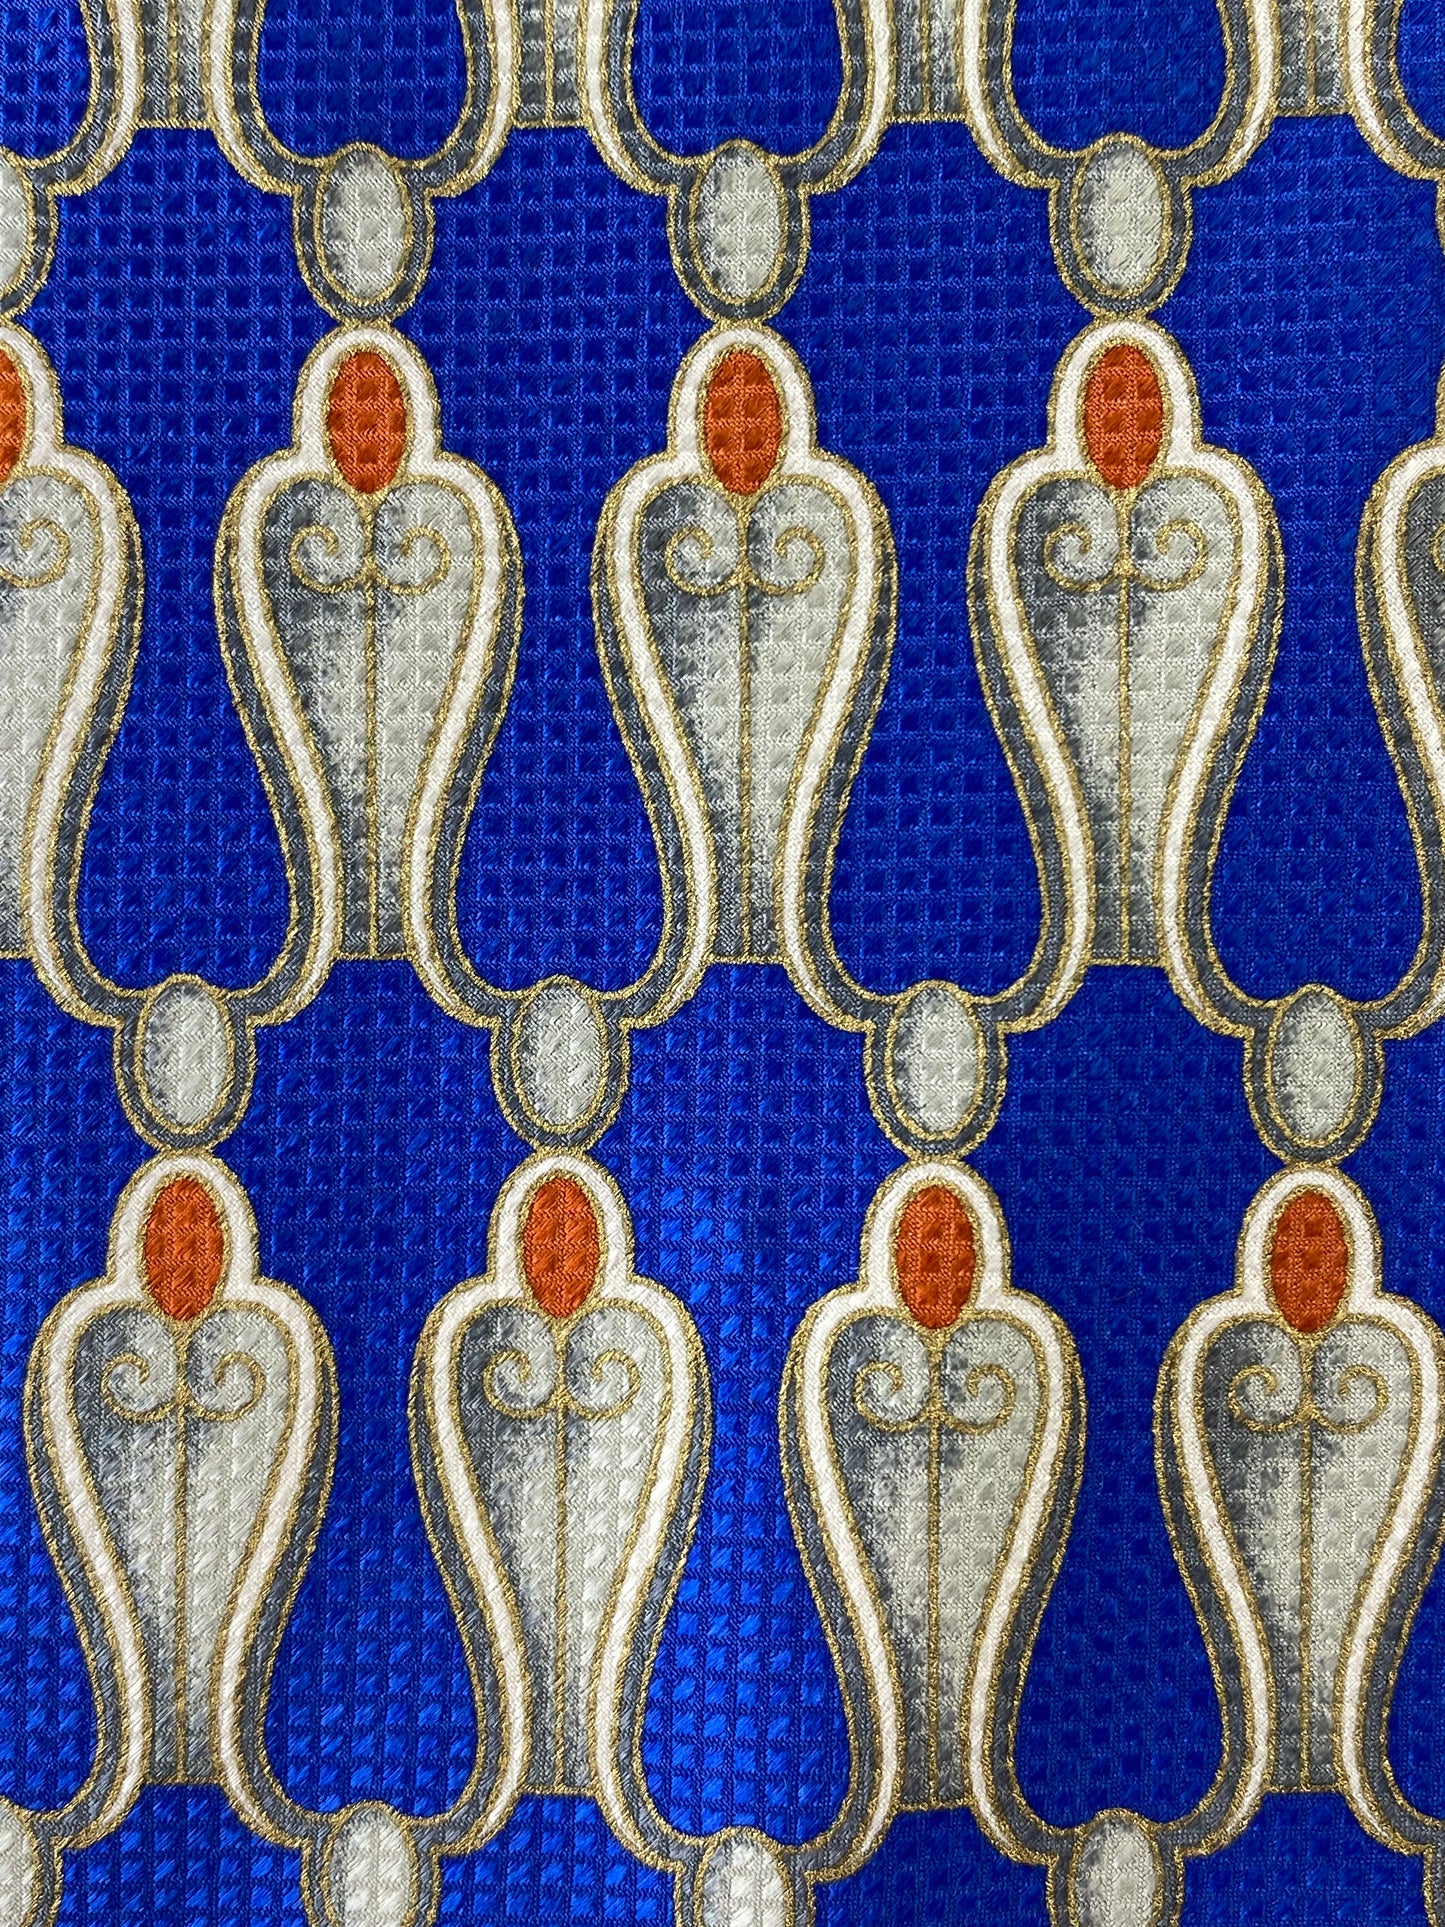 Close-up pattern detail of: 90s Deadstock Silk Necktie, Men's Vintage Blue/Silver/Gold Pattern Tie, NOS